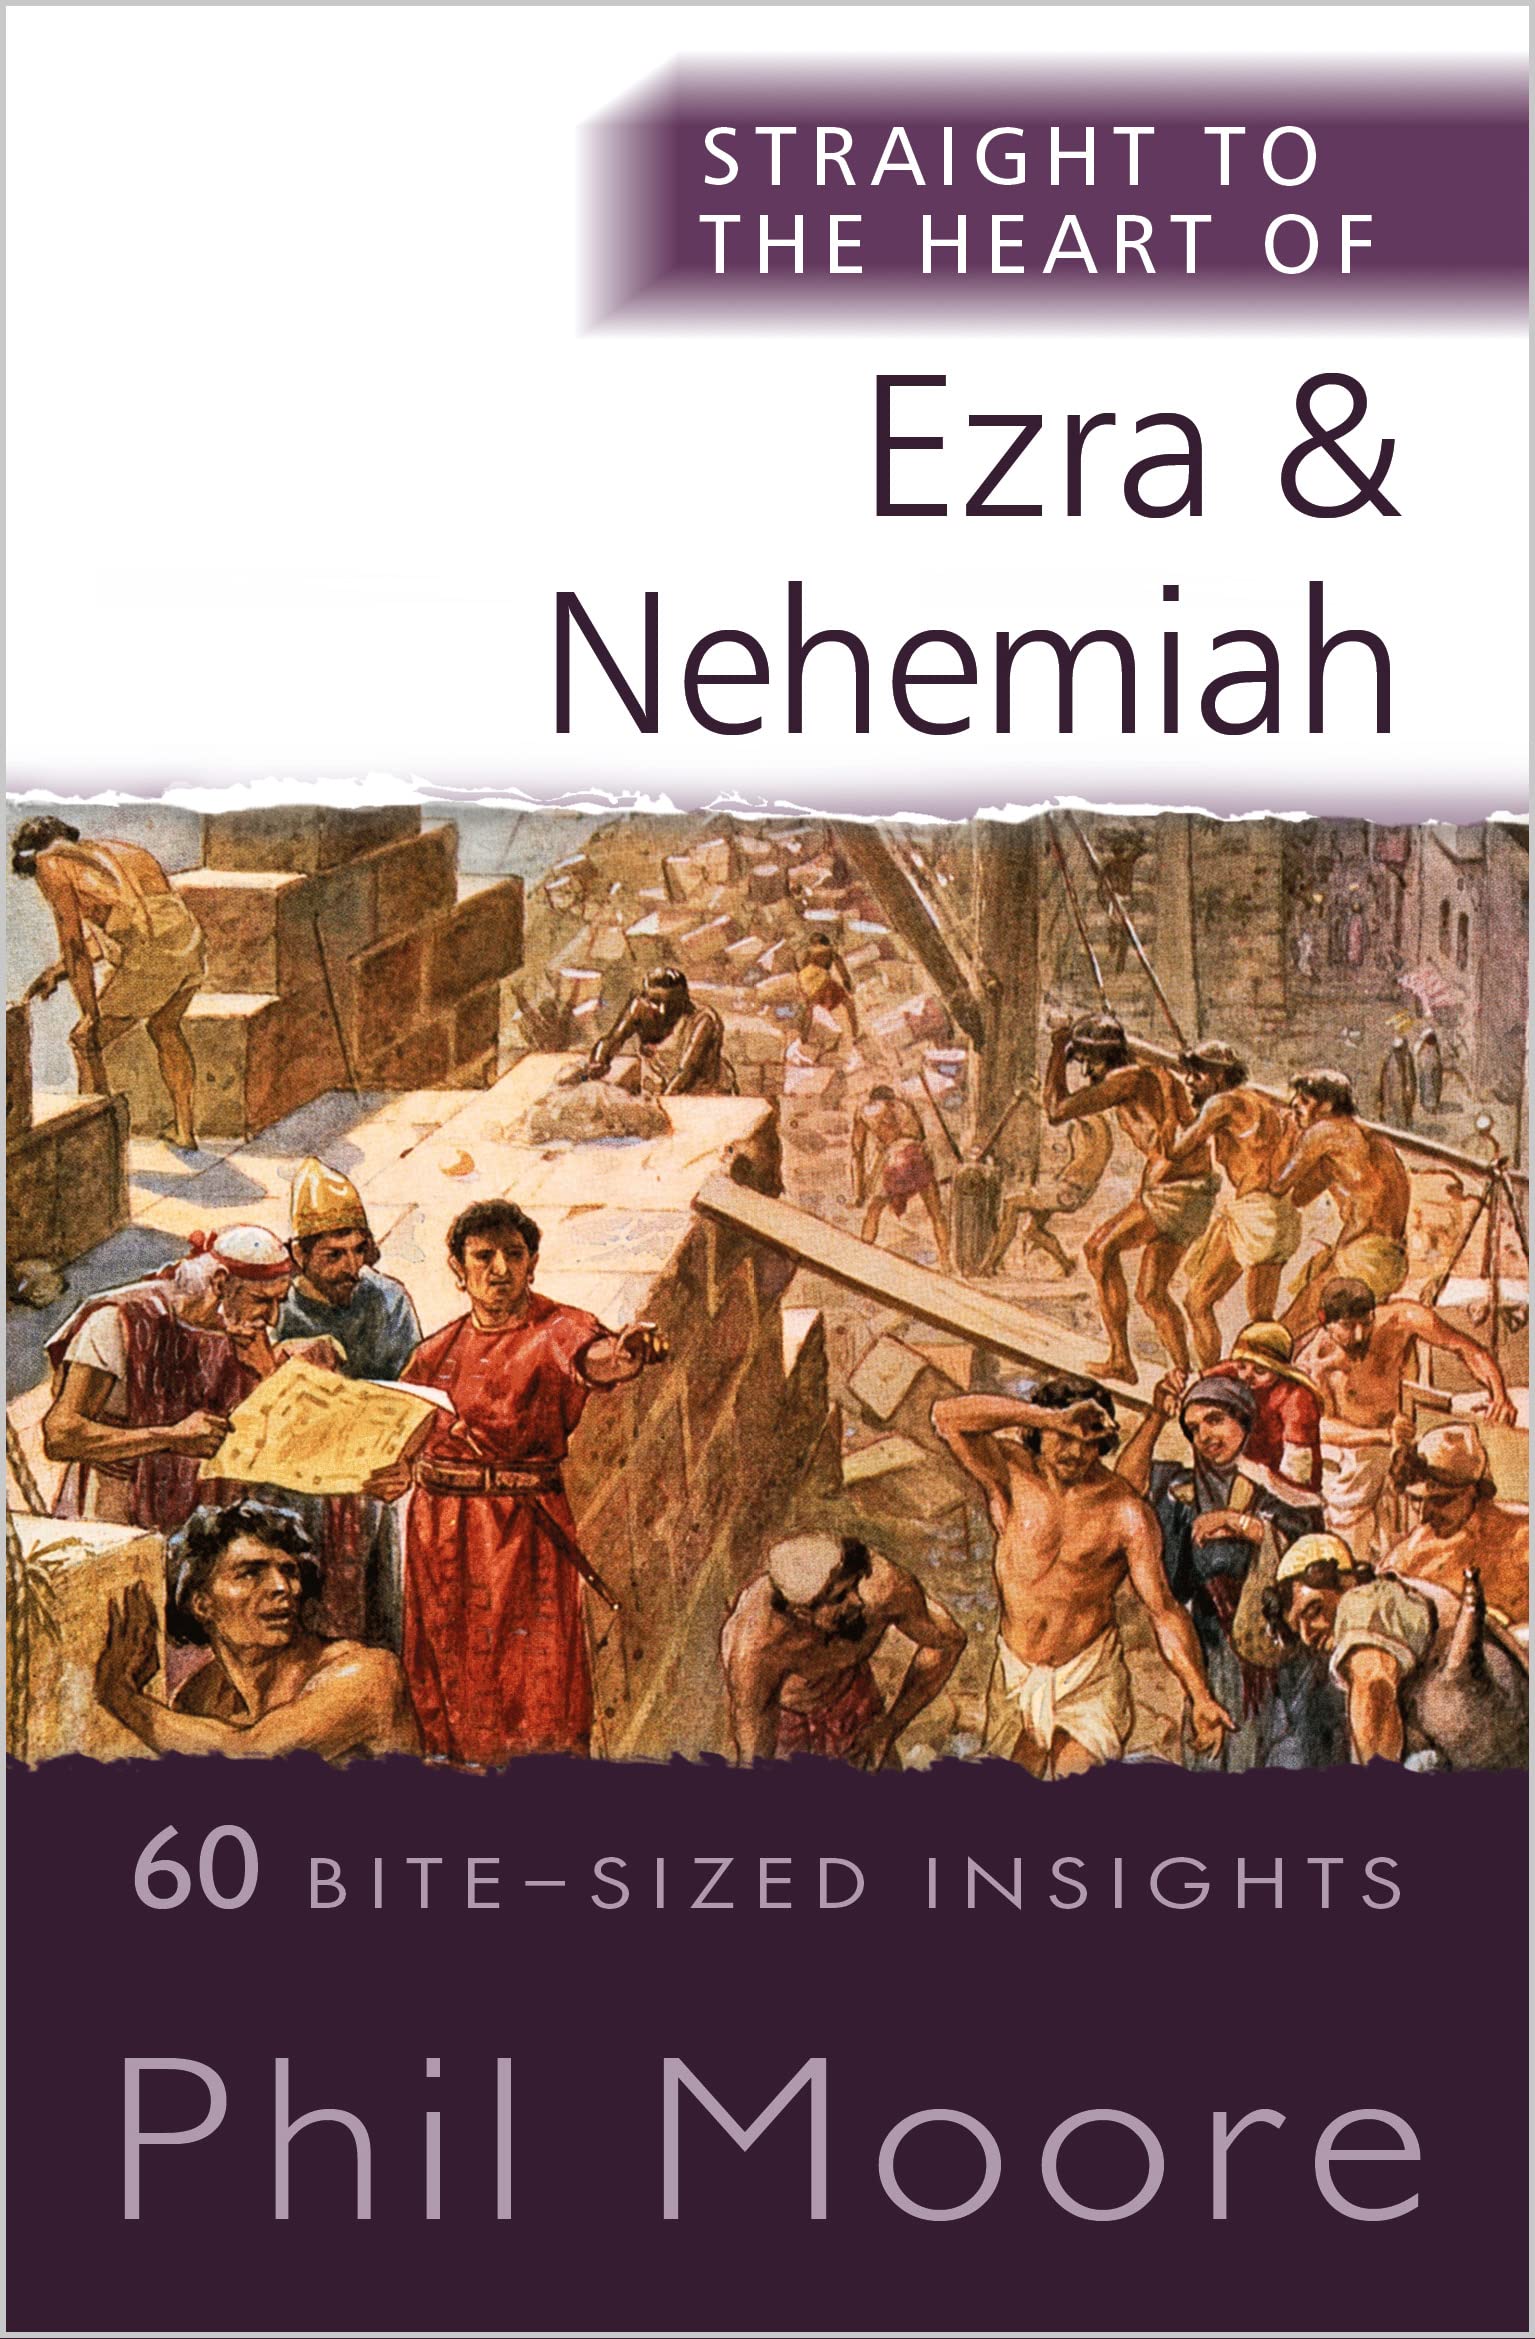 STRAIGHT TO THE HEART OF EZRA & NEHEMIAH